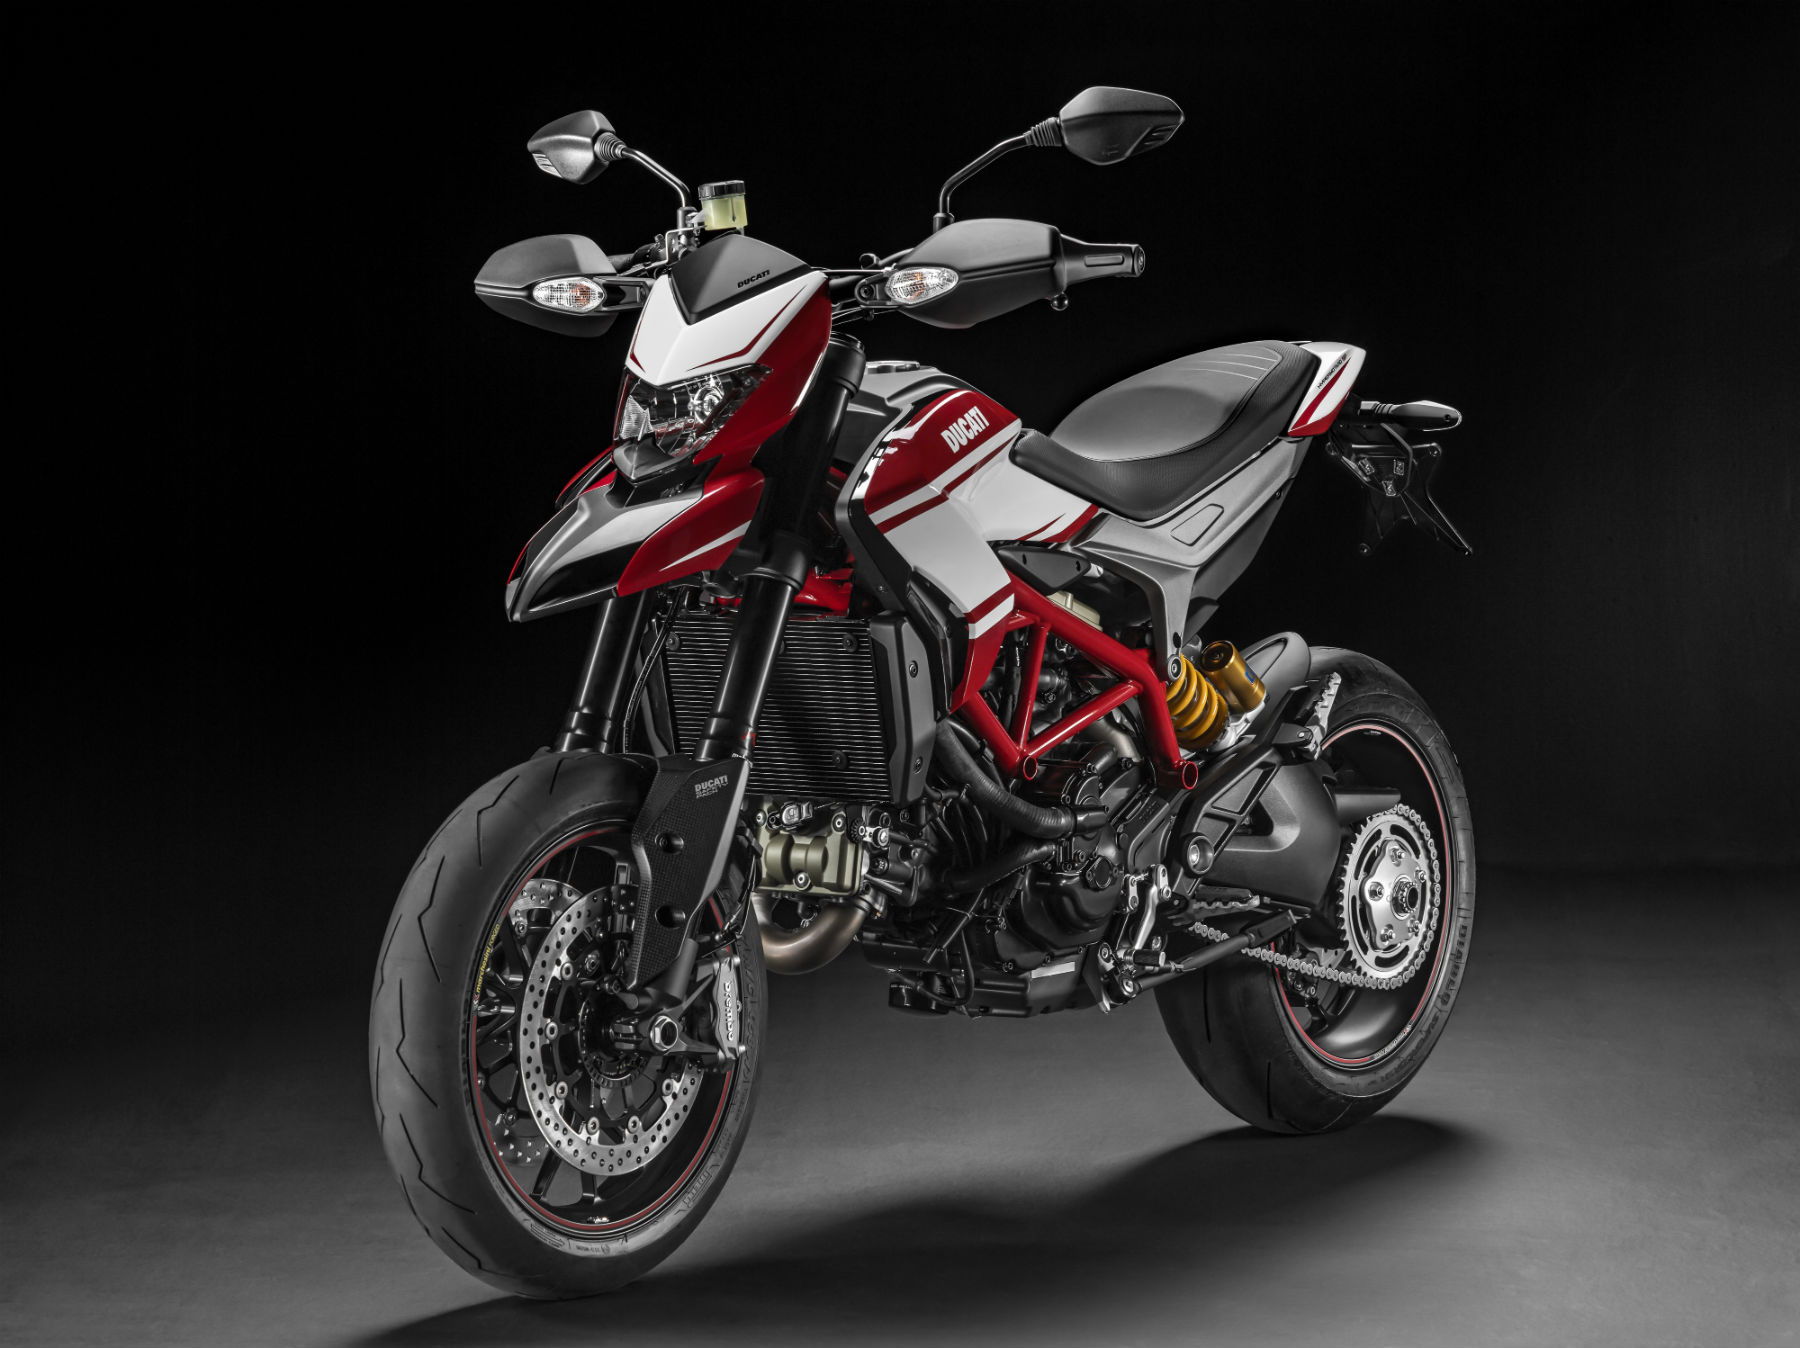 New colour scheme for Ducati Hypermotard SP